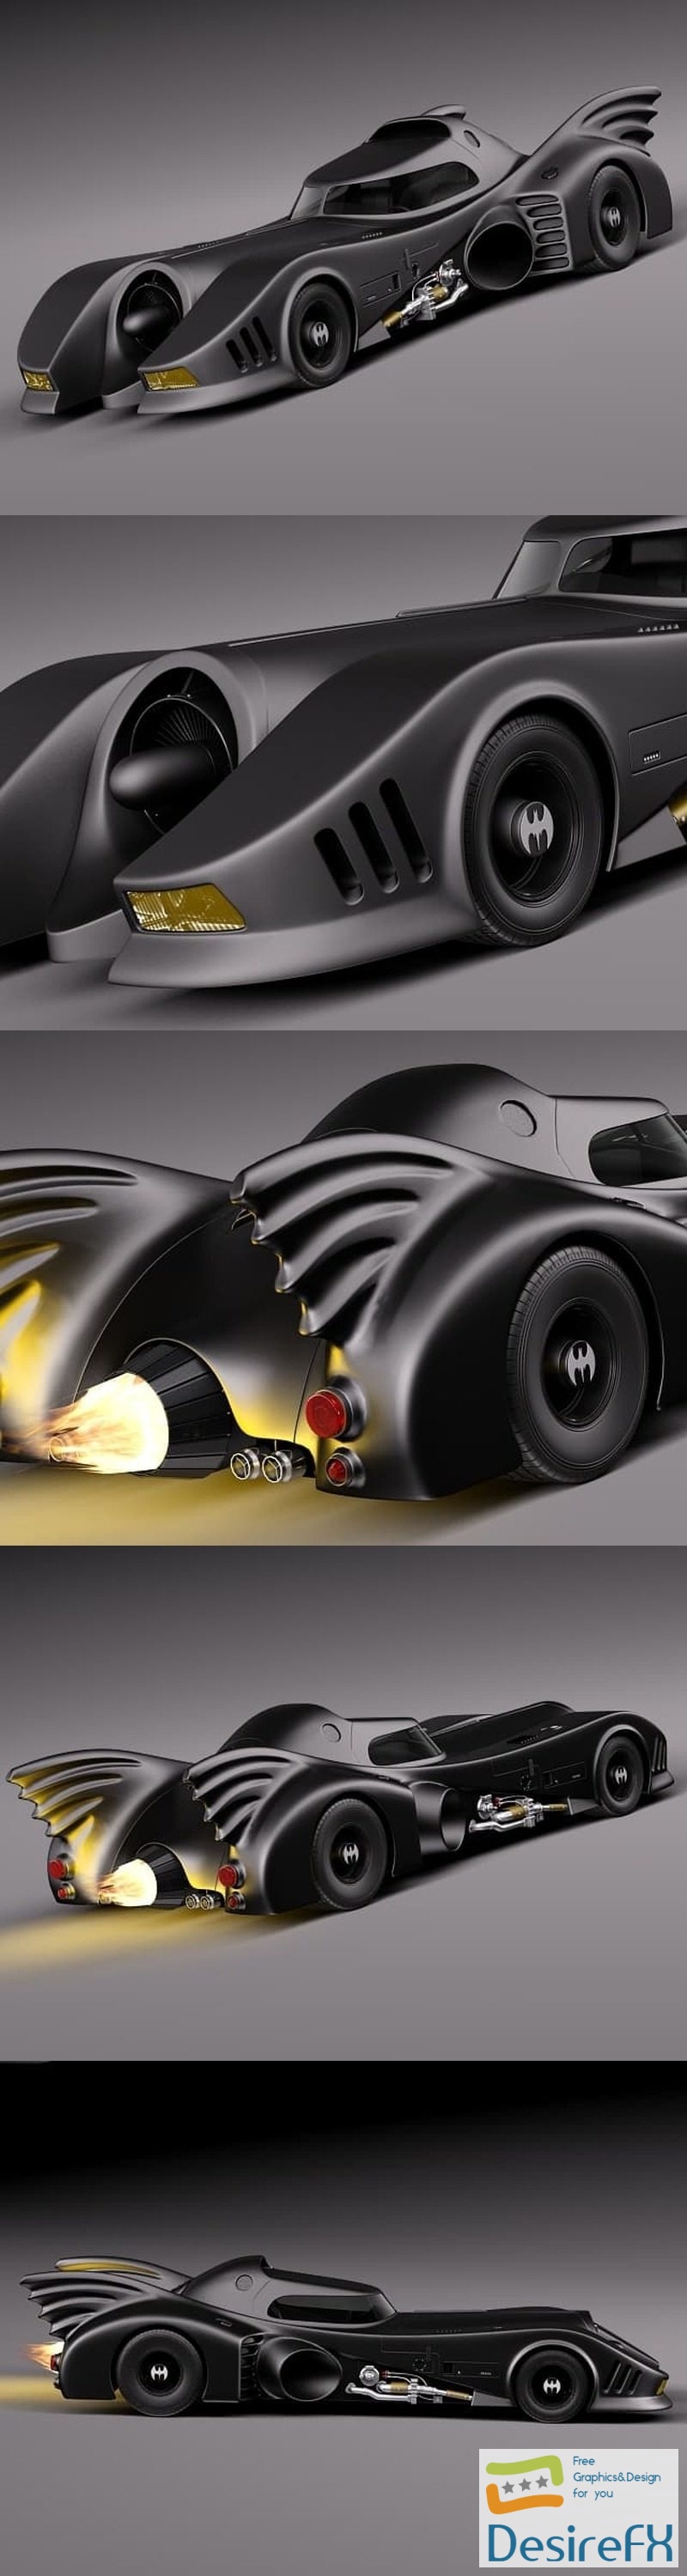 Batmobile 1989 Jet Car 3D Model